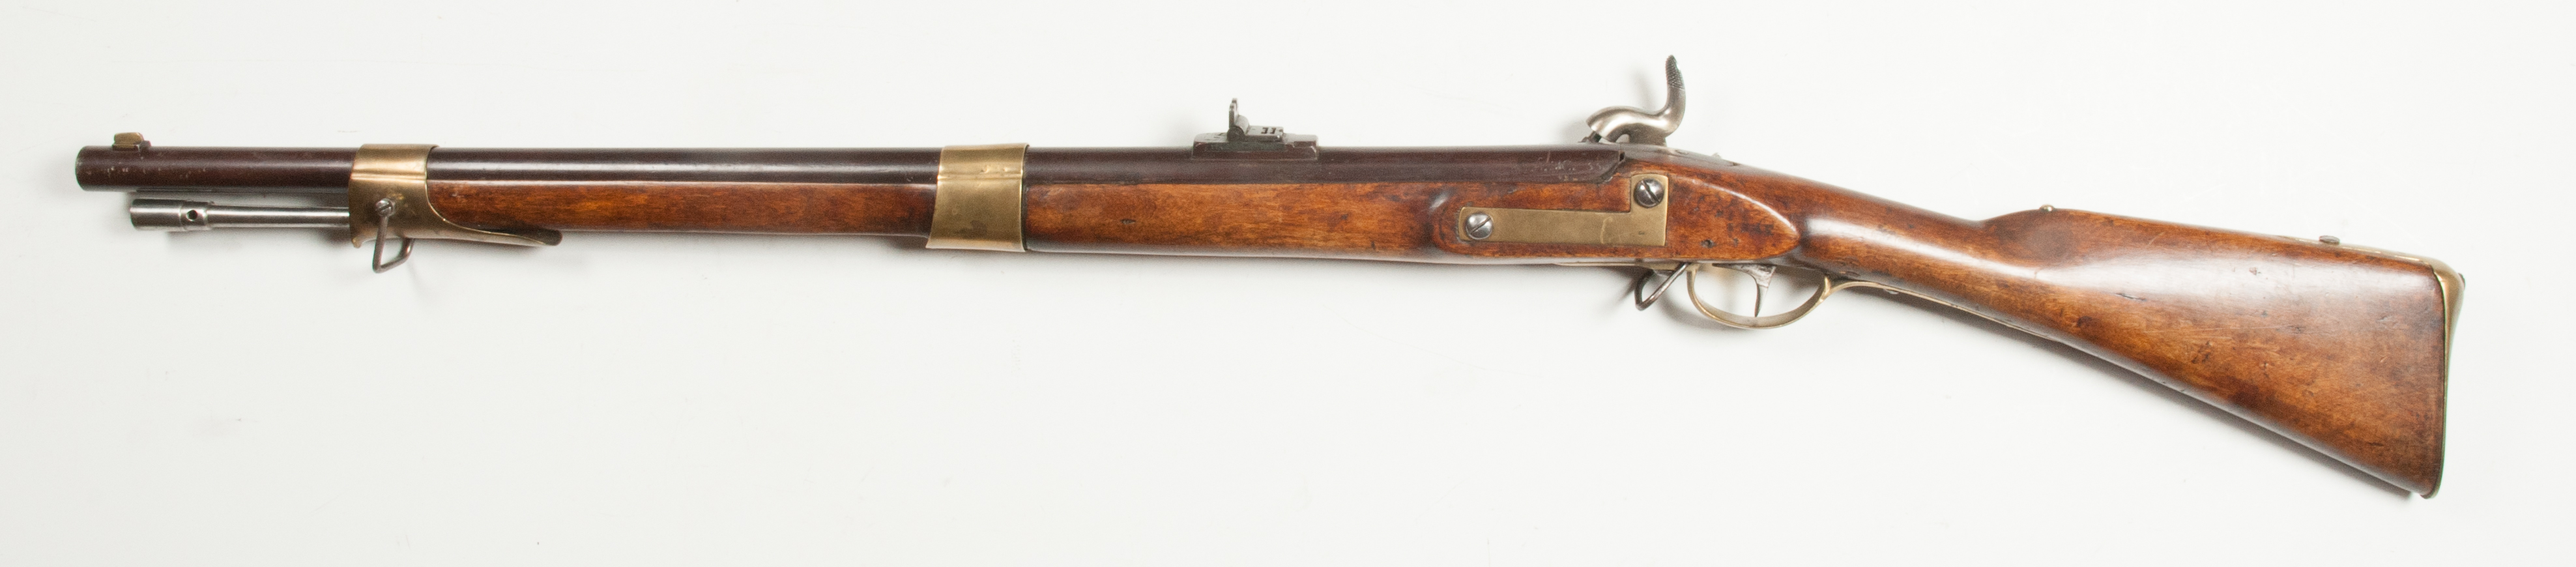 ./guns/rifle/bilder/Rifle-Kongsberg-Perkusjon-M1825-41-60-1742-2.jpg